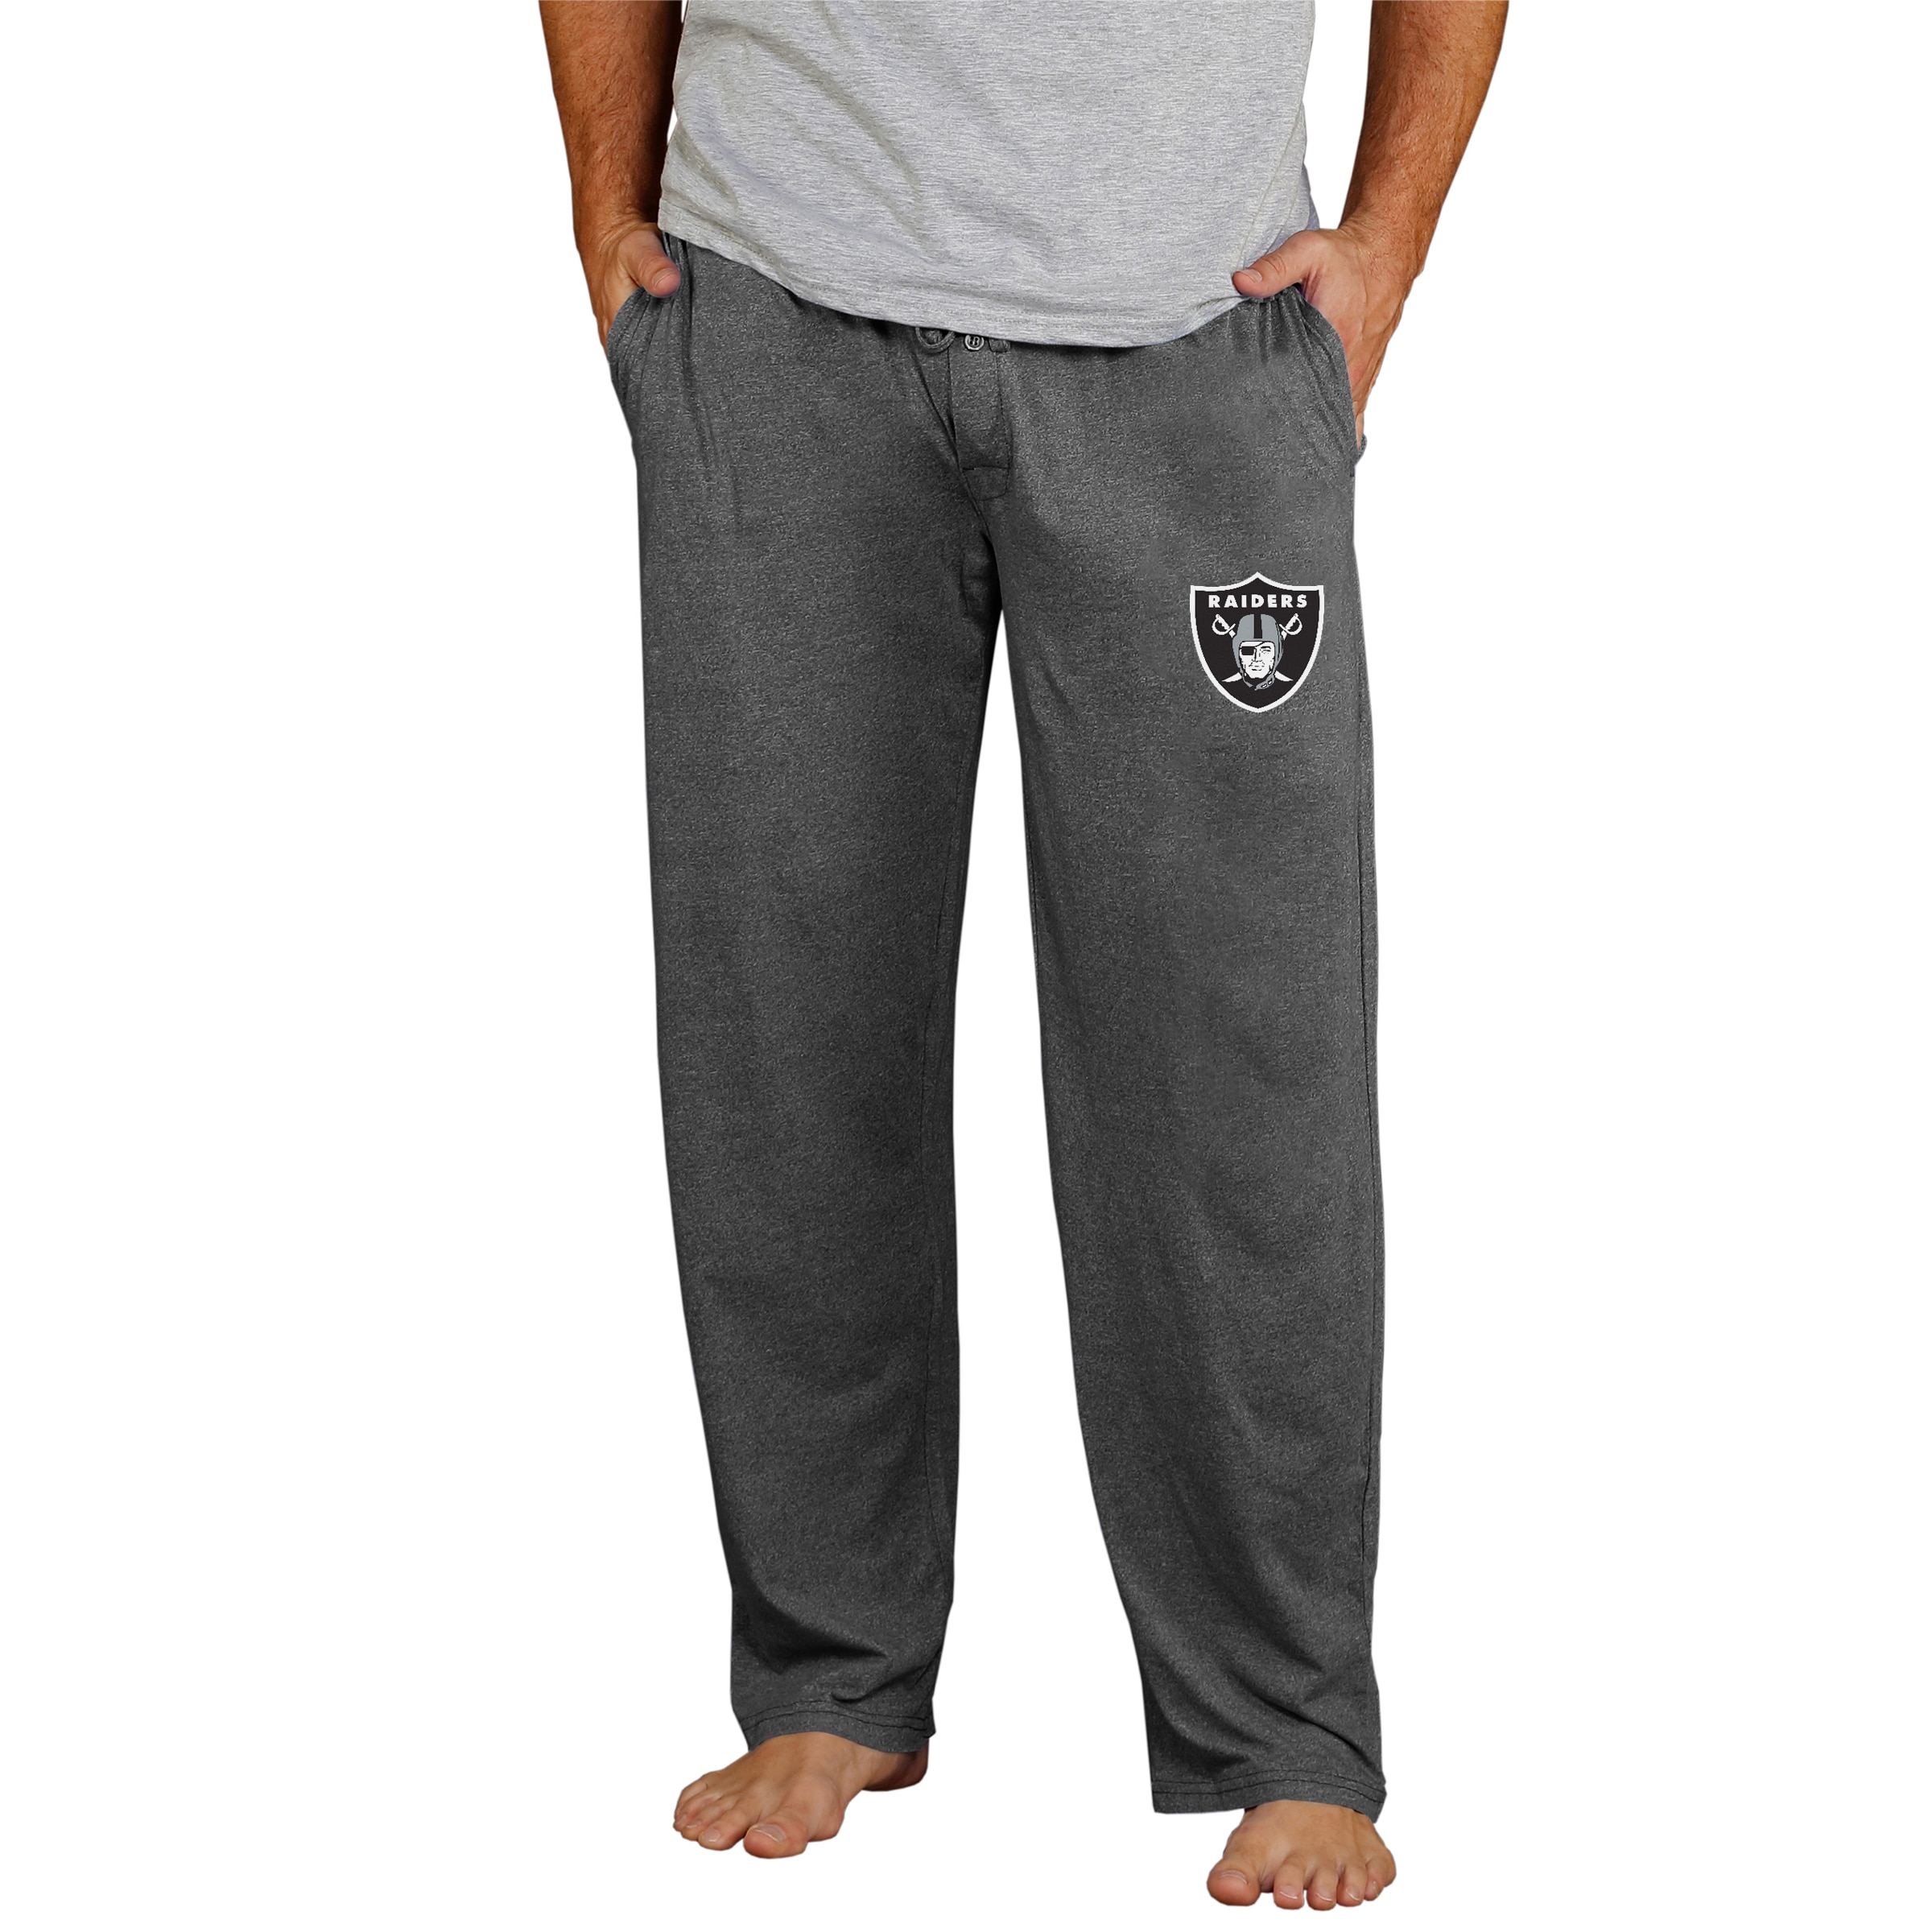 Men's Concepts Sport Charcoal Las Vegas Raiders Lightweight Quest Knit Sleep Pants - image 1 of 1